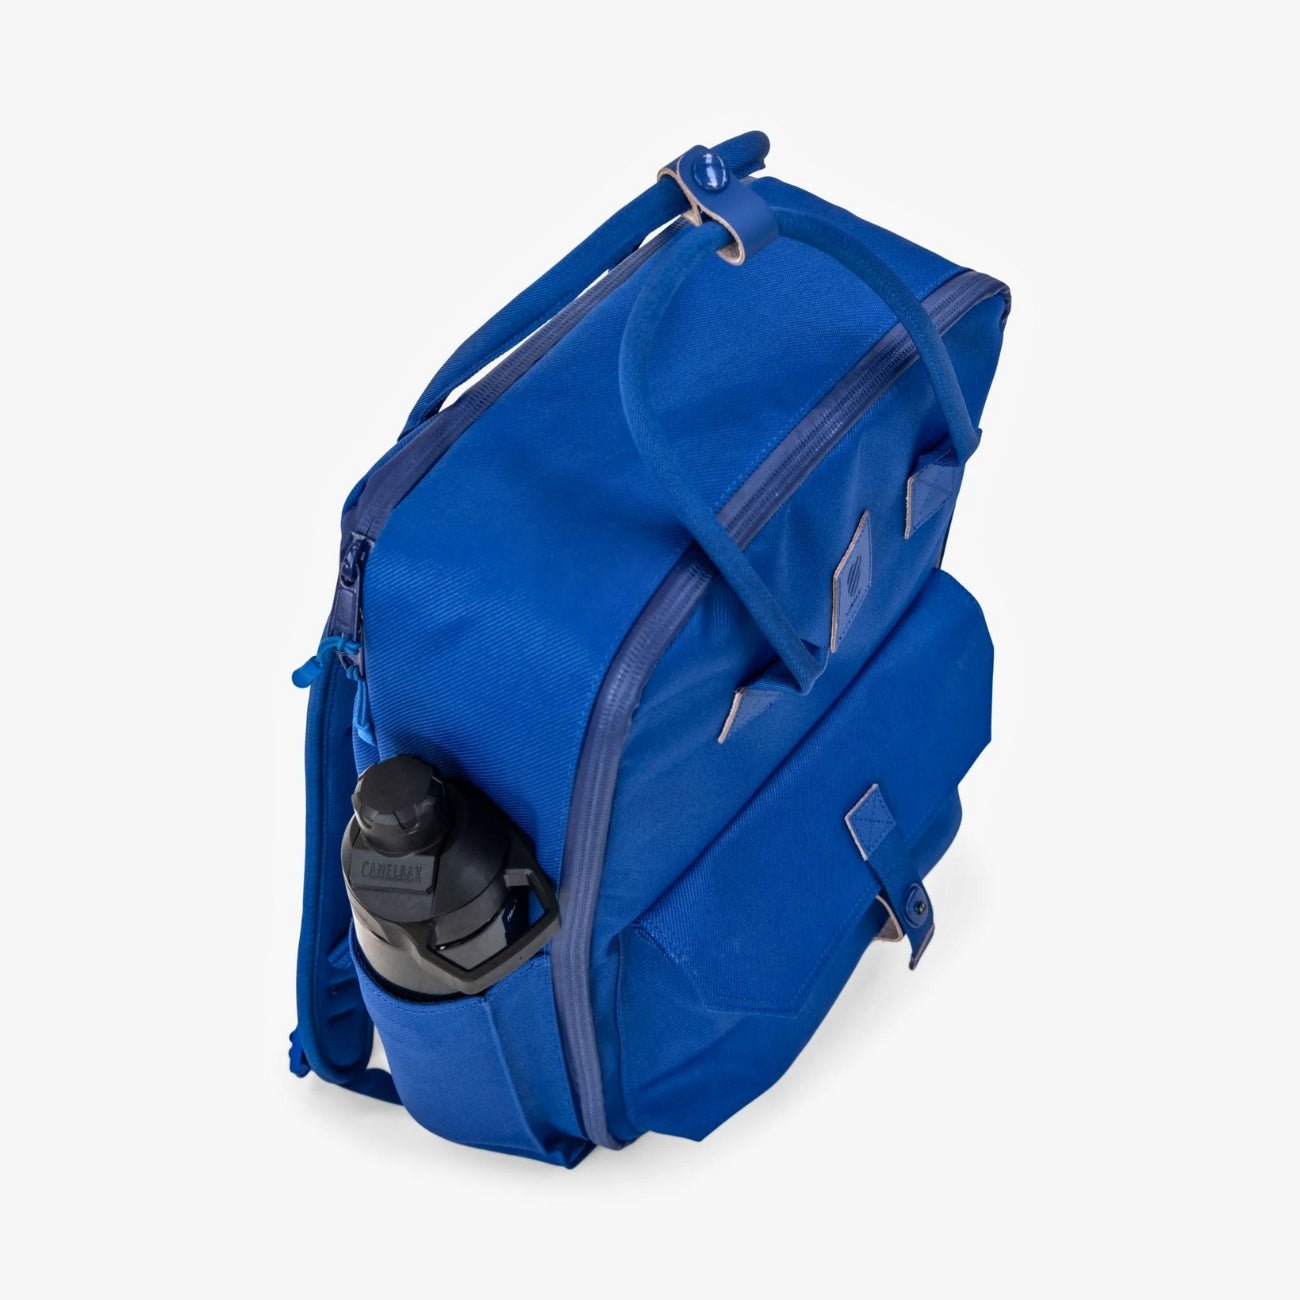 The New Sierra Backpack - Classic Blue